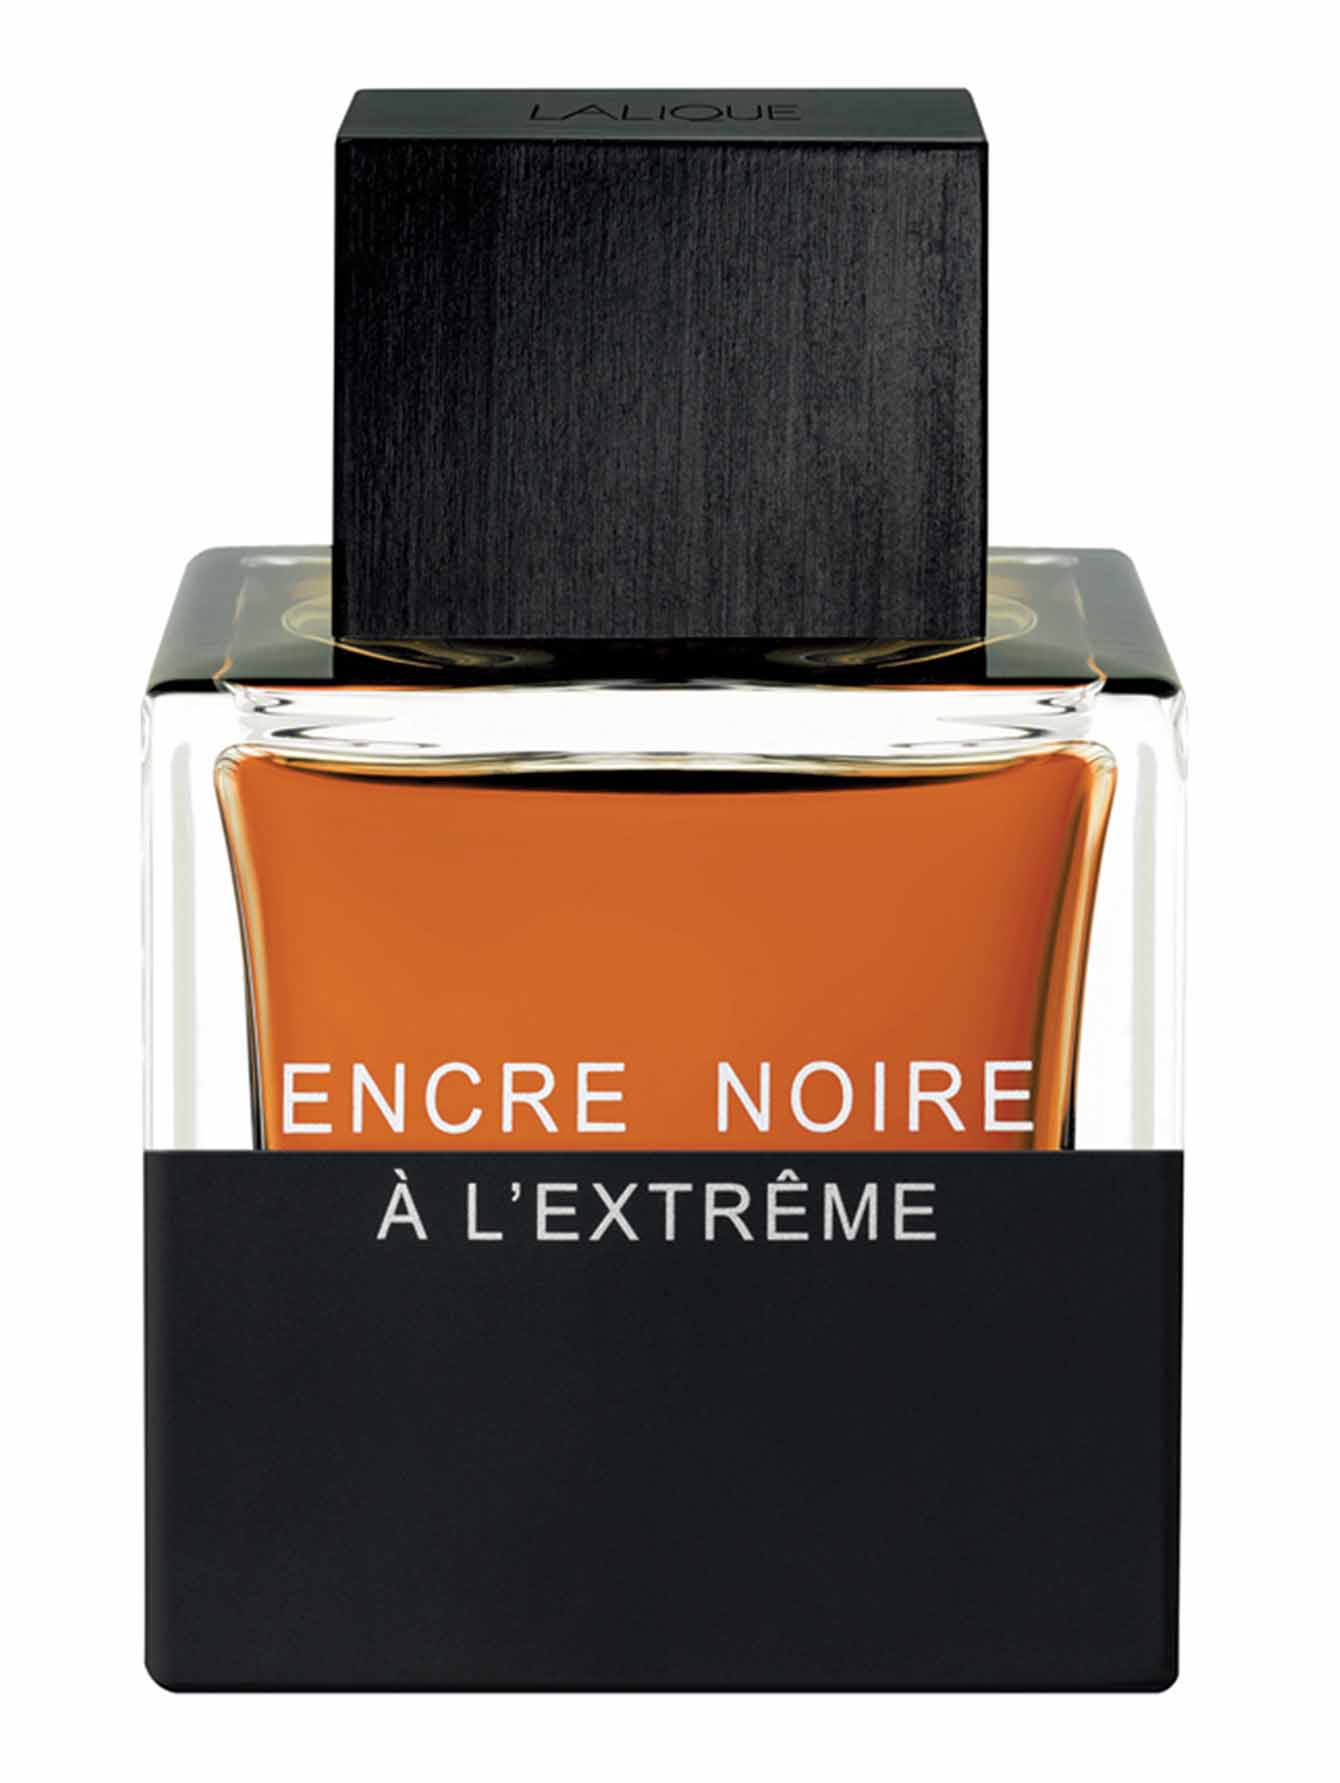  Парфюмерная вода Encre Noire A L'Extreme 100 мл  - Общий вид